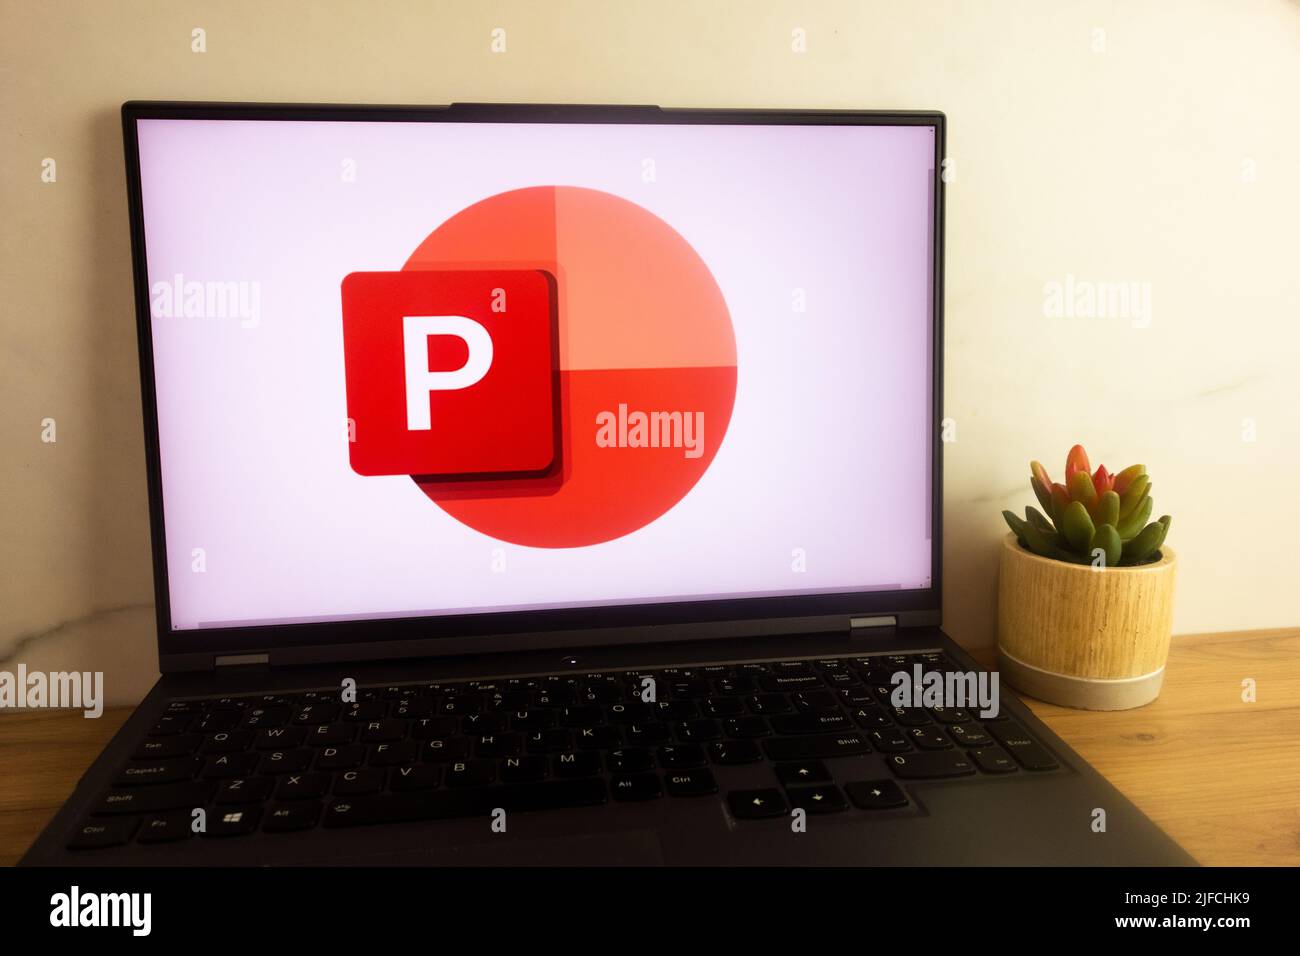 KONSKIE, POLAND - June 30, 2022: Microsoft PowerPoint presentation program logo displayed on laptop computer screen Stock Photo